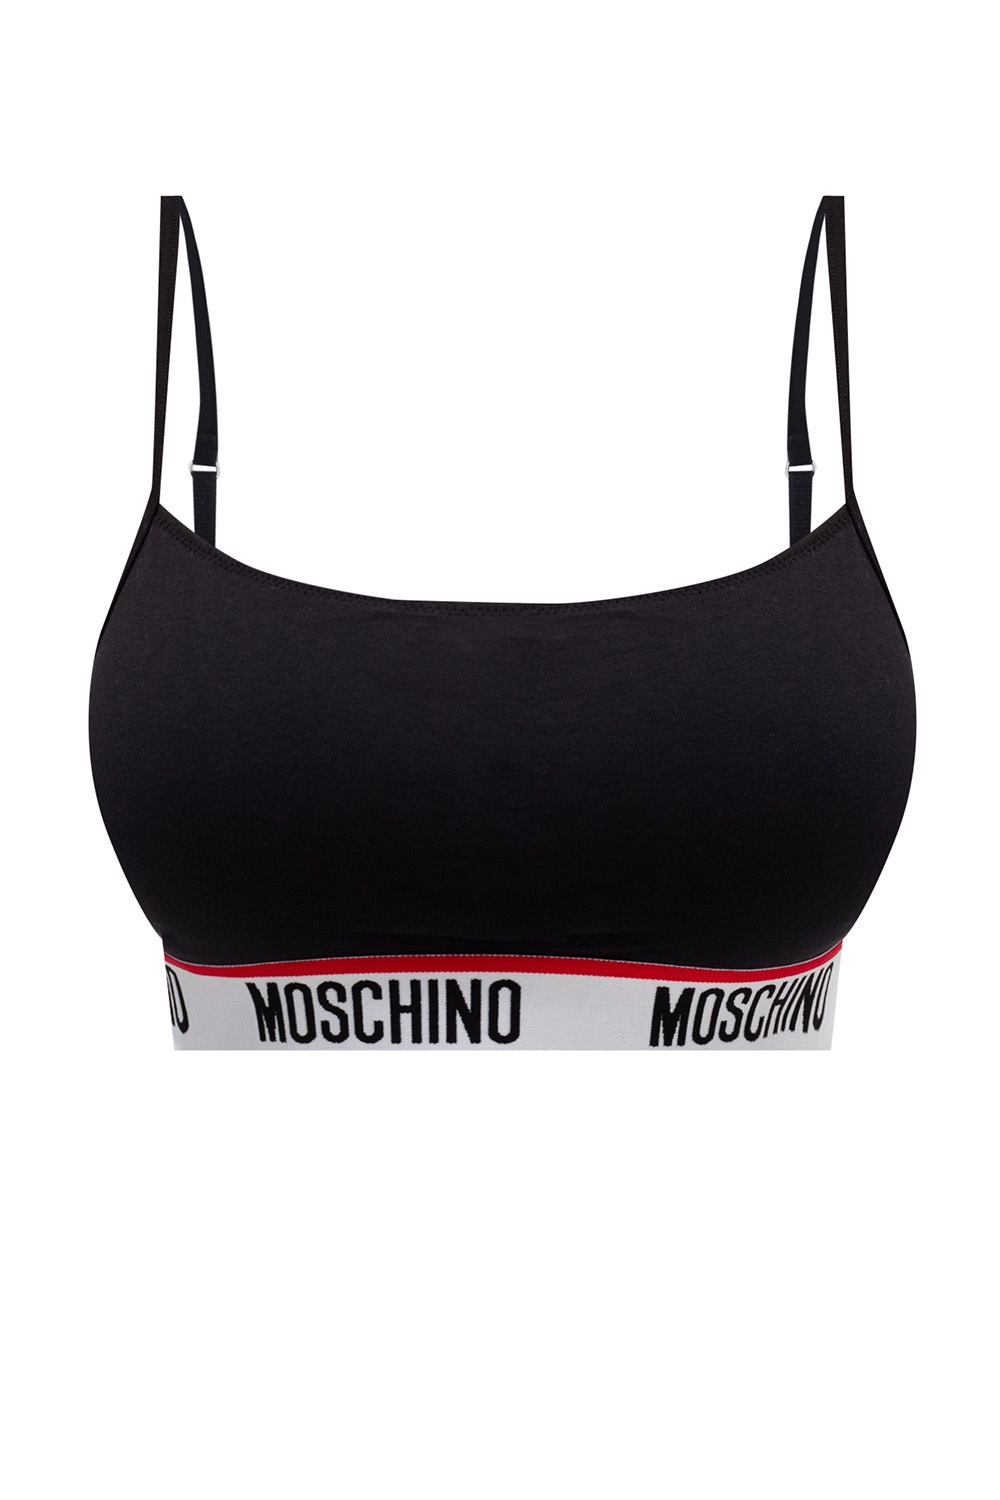 Moschino Bra With Logo in Black